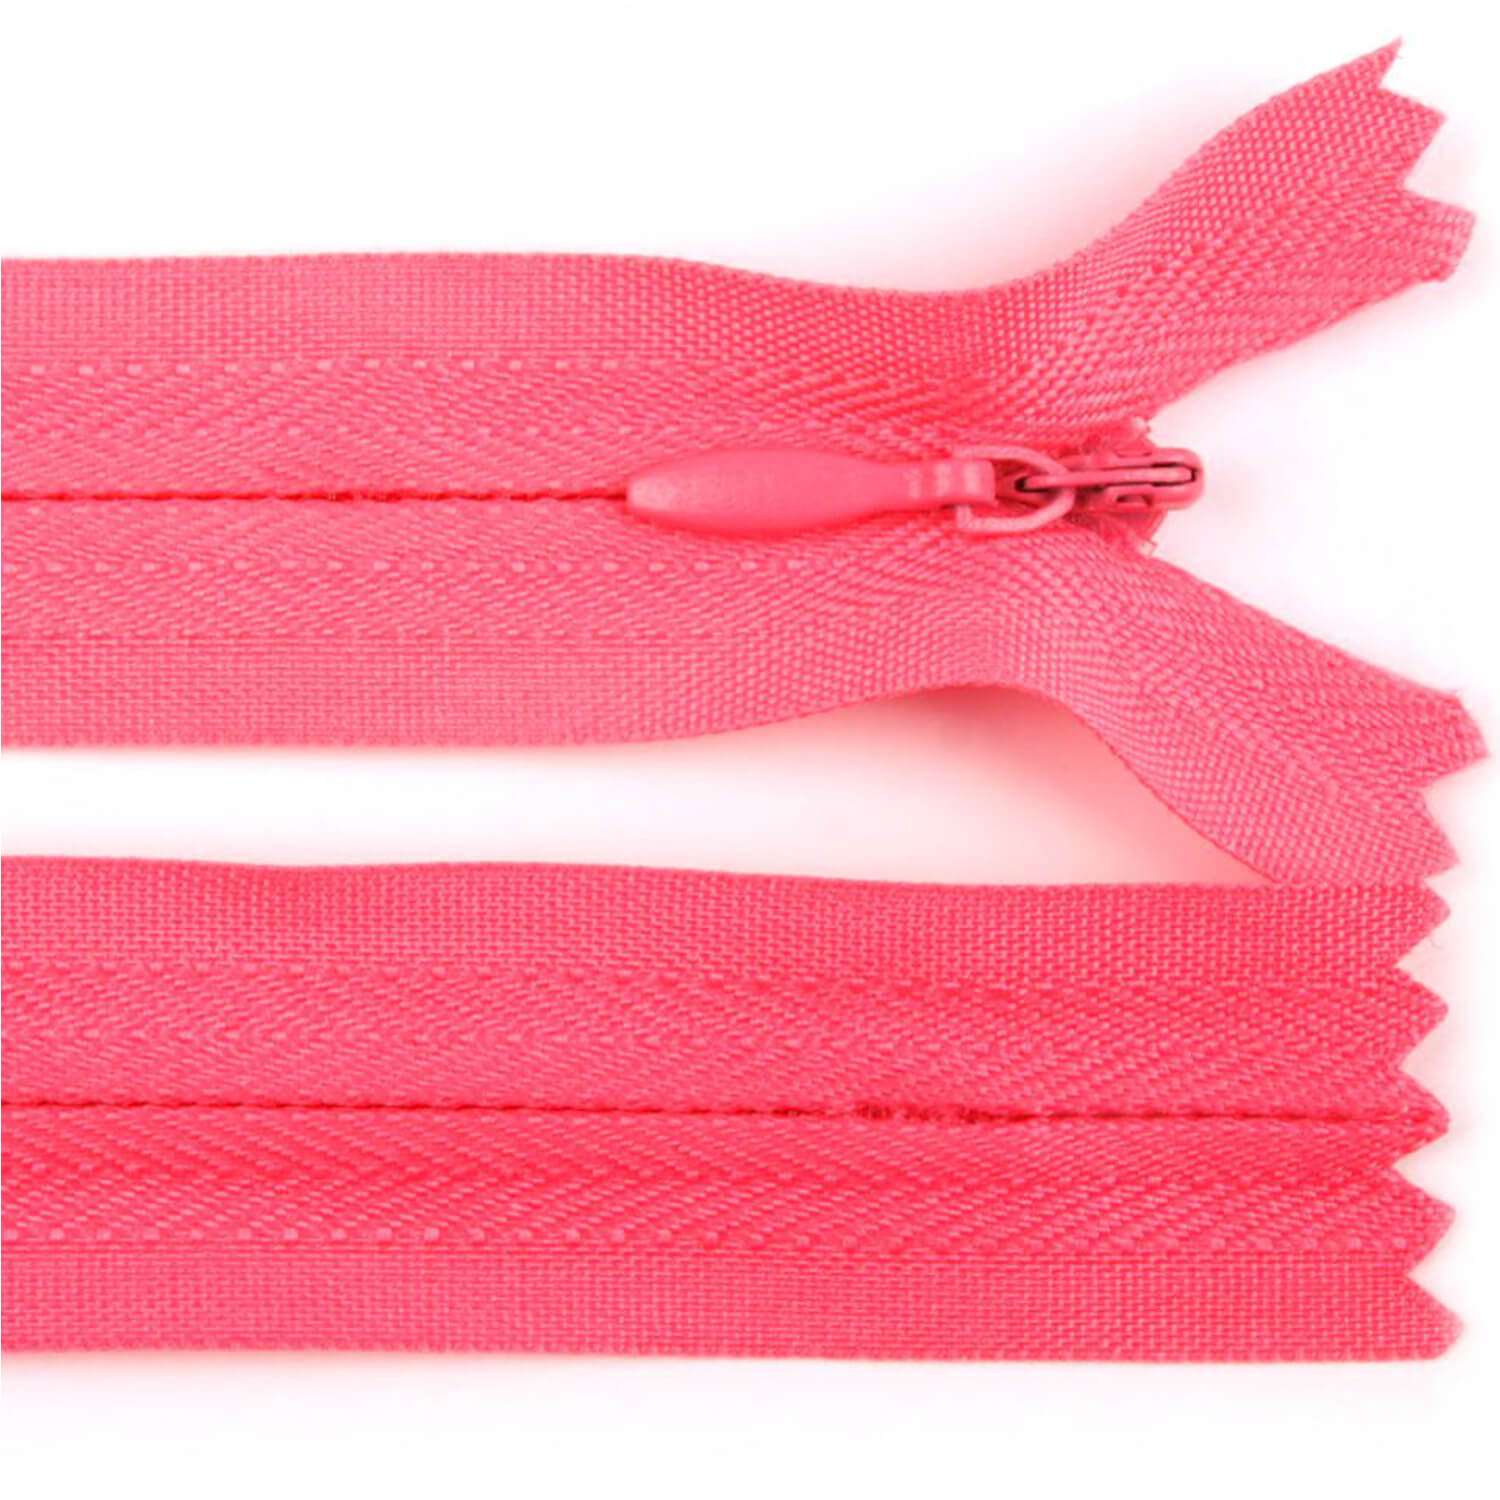 Reißverschluss - 30cm - nicht trennbar - Pink (338)